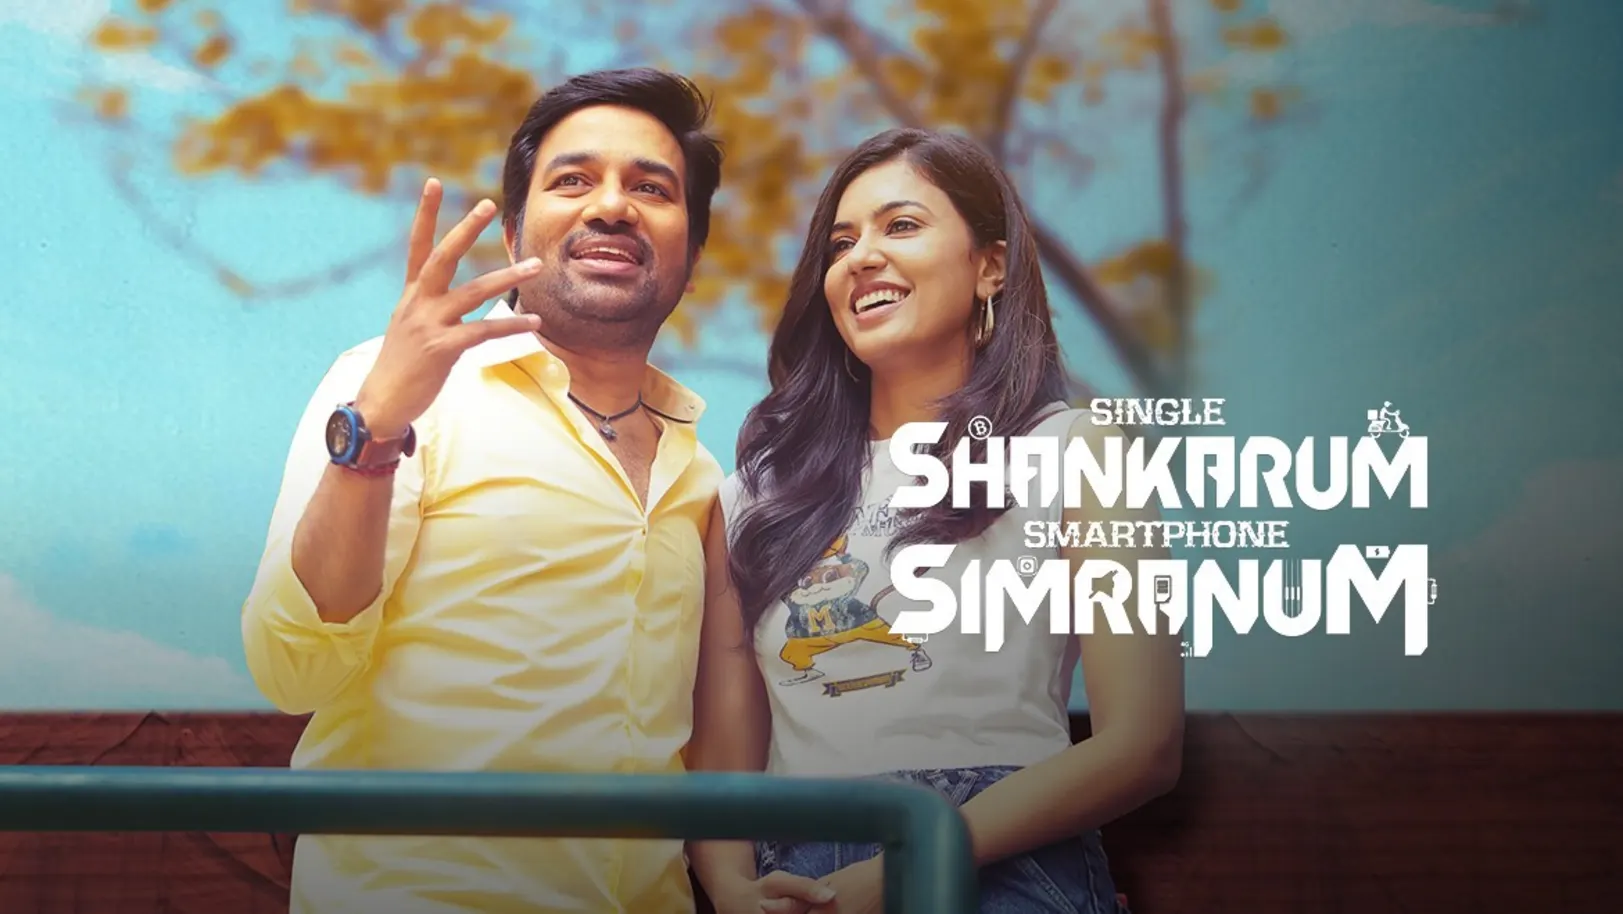 Single Shankarum Smartphone Simranum Movie